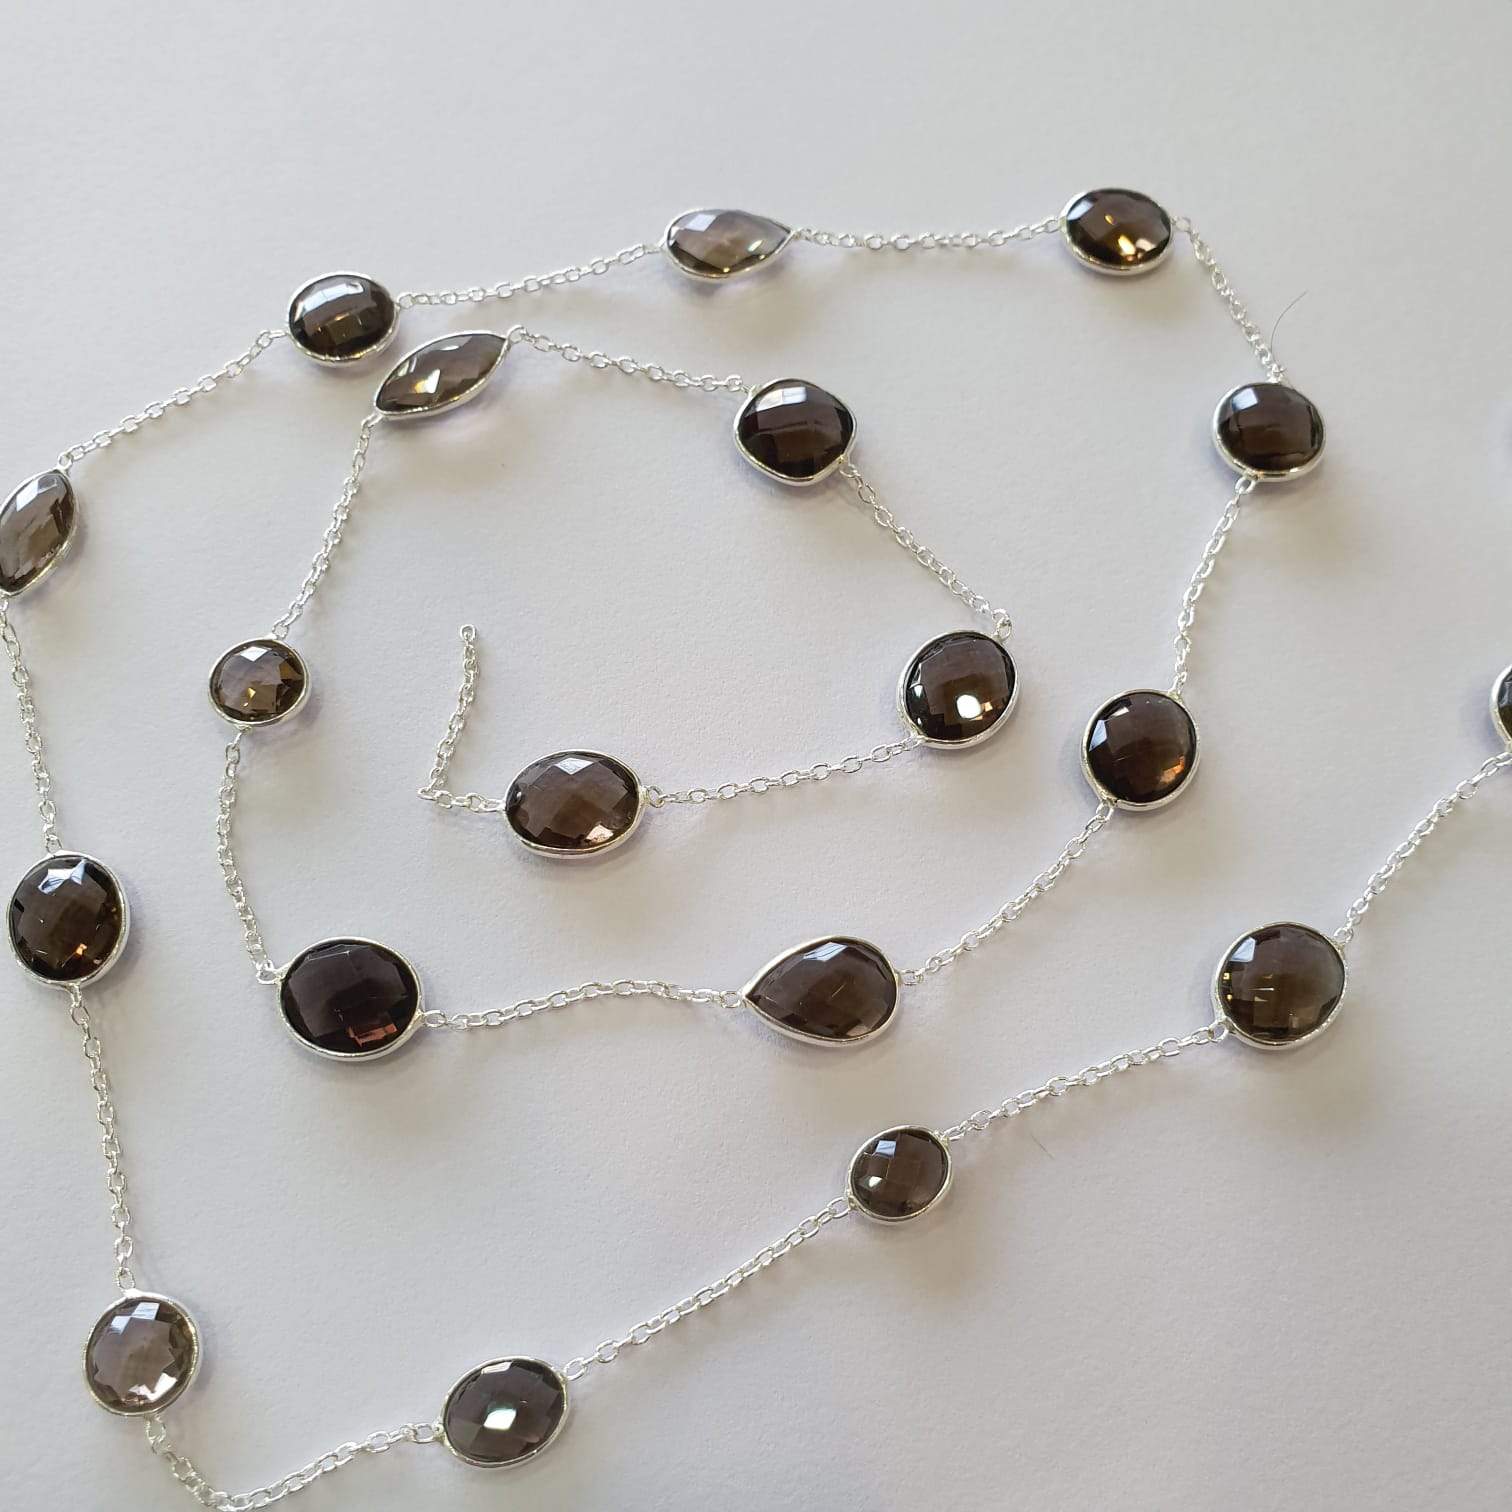 Smoky Quartz Necklace Precious Sterling Silver Jewelry With Clasp - The LabradoriteKing